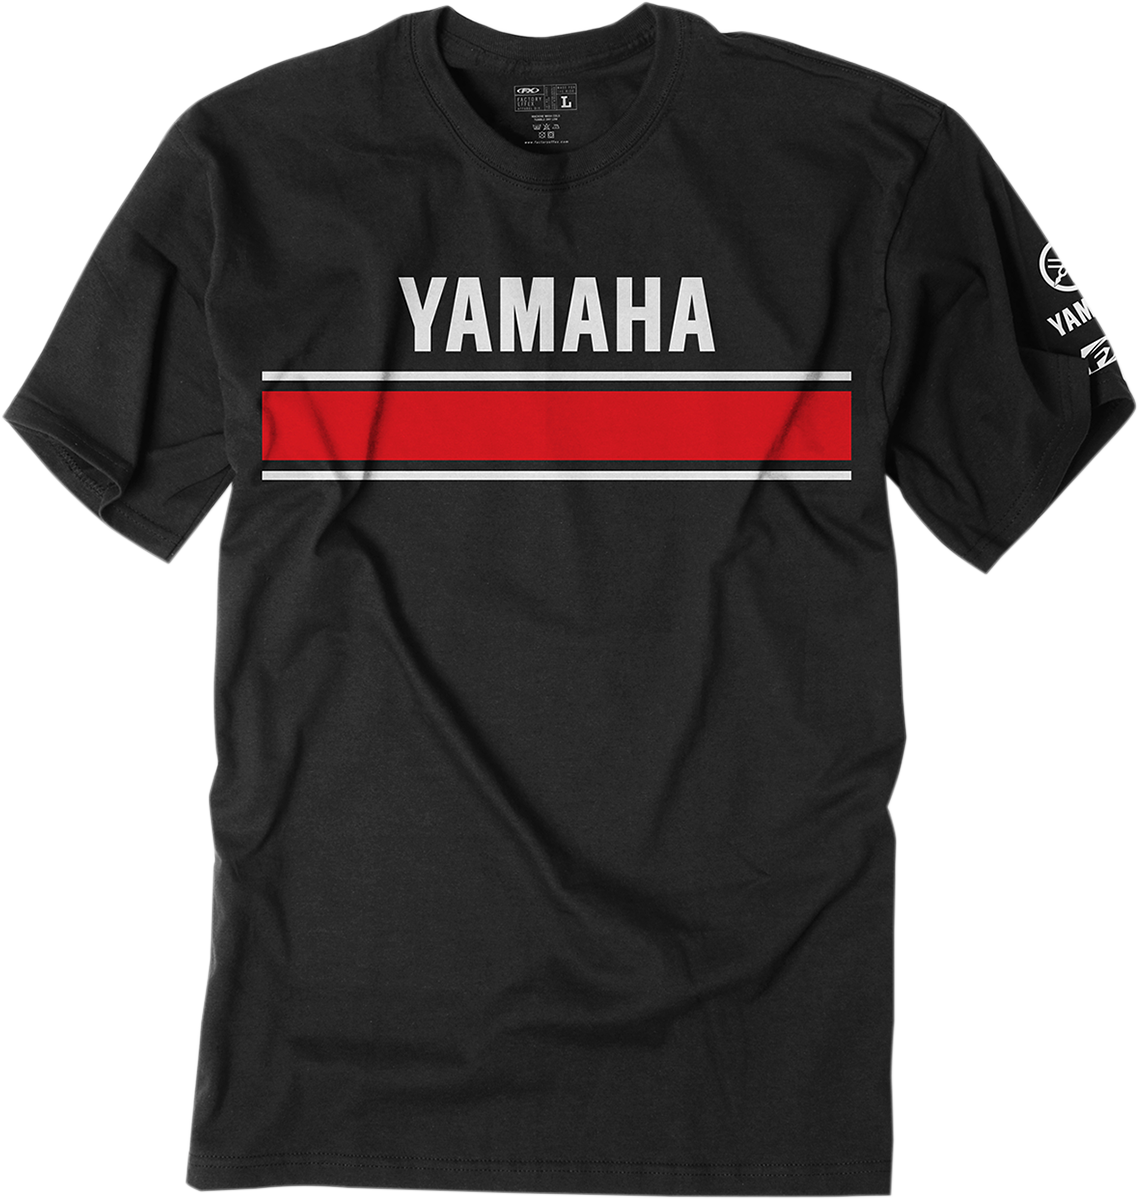 FACTORY EFFEX Camiseta retro Yamaha - Negra - Mediana 20-87202 